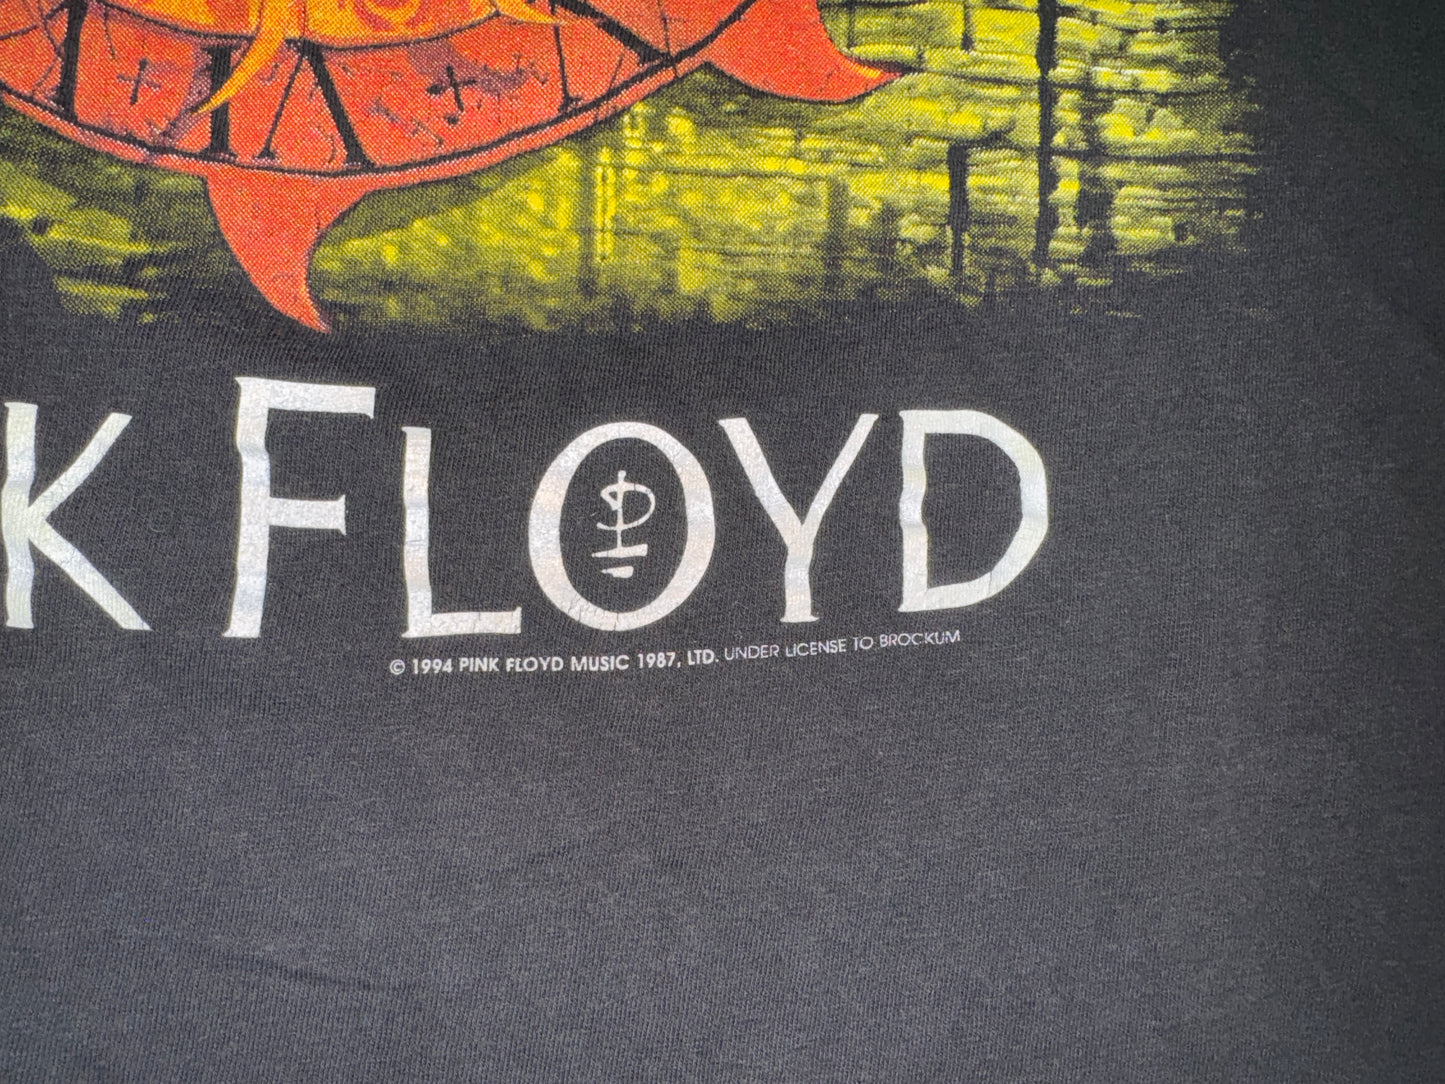 Vintage 1994 Pink Floyd T-Shirt